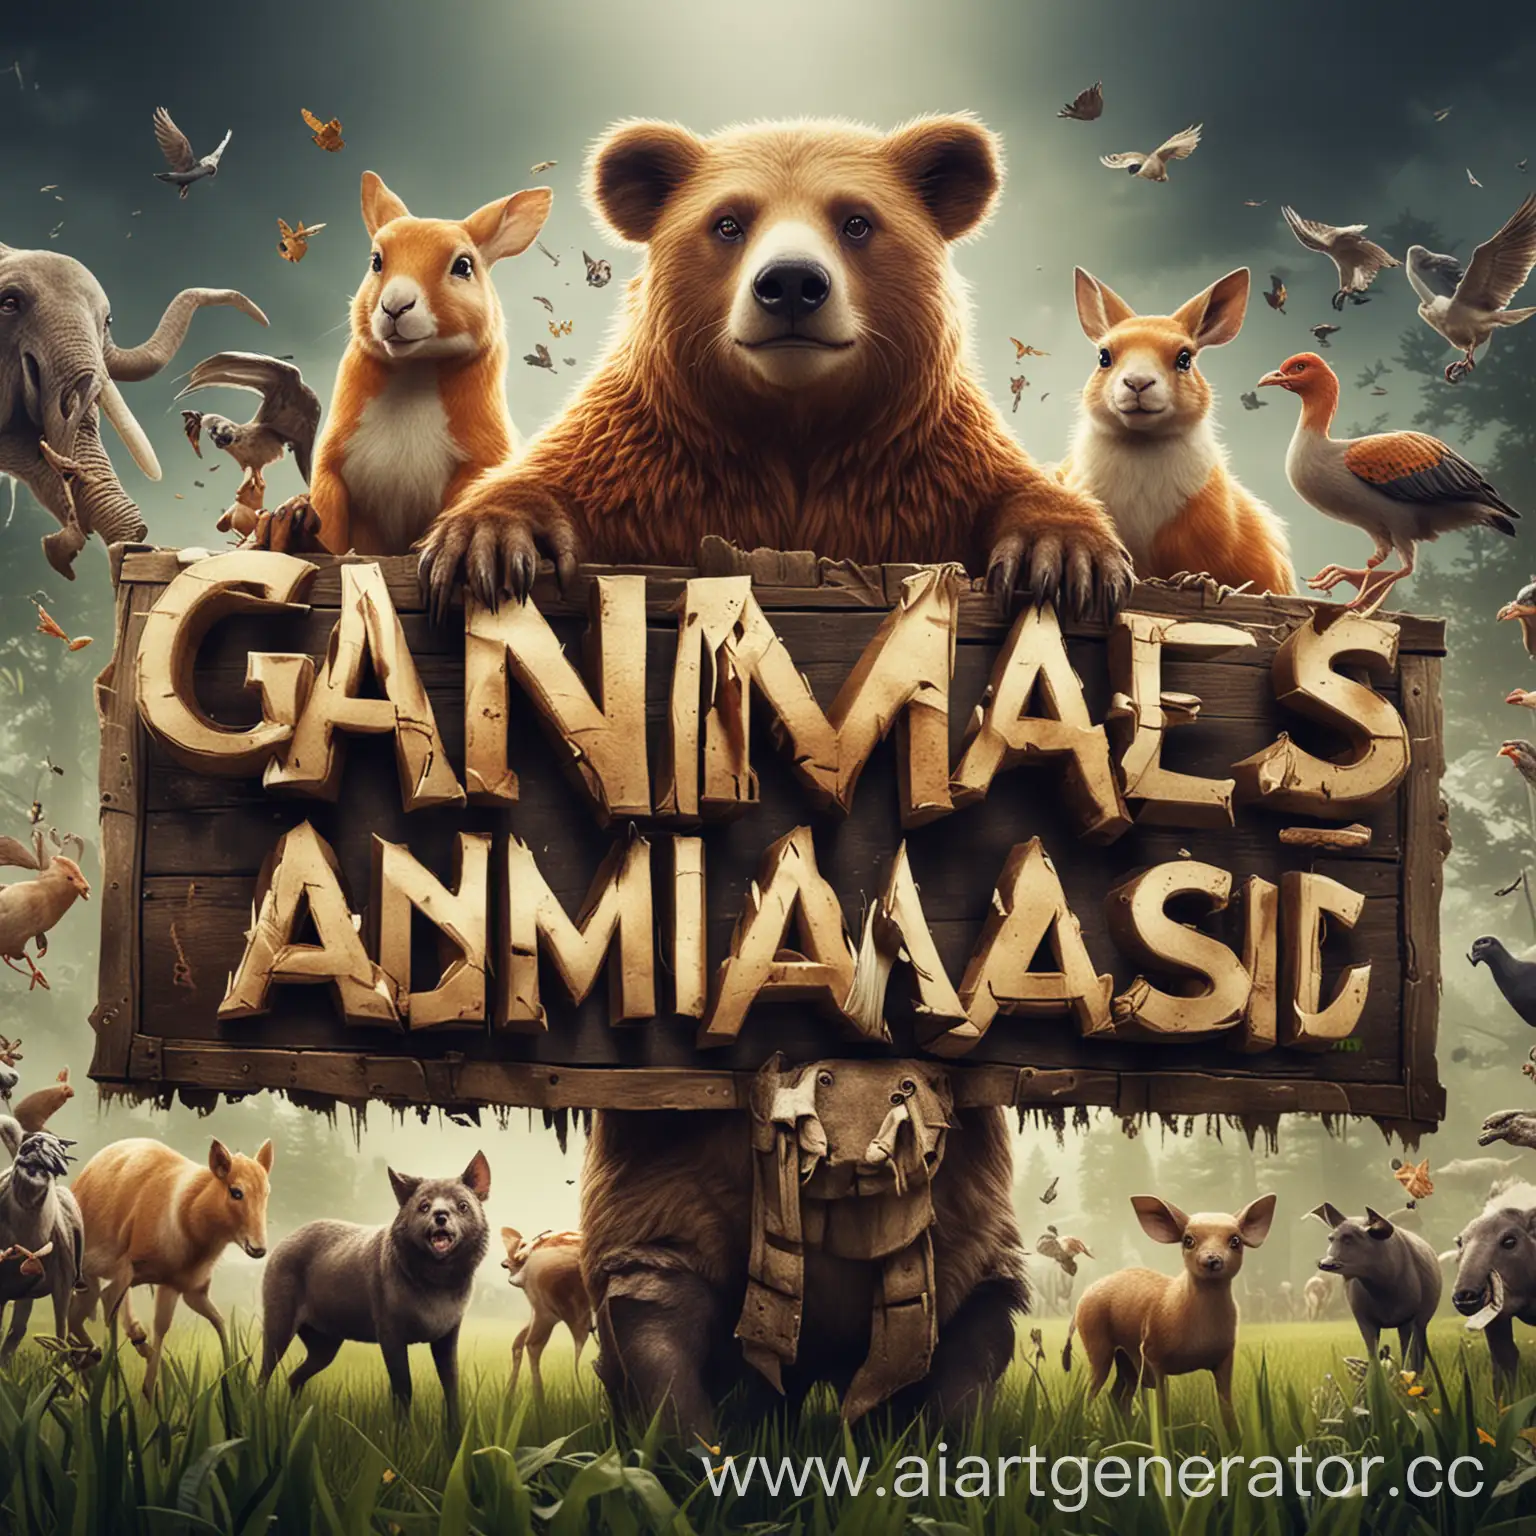 Interactive-Animal-Adventure-PC-Games-Captivating-Banner-Advertisement